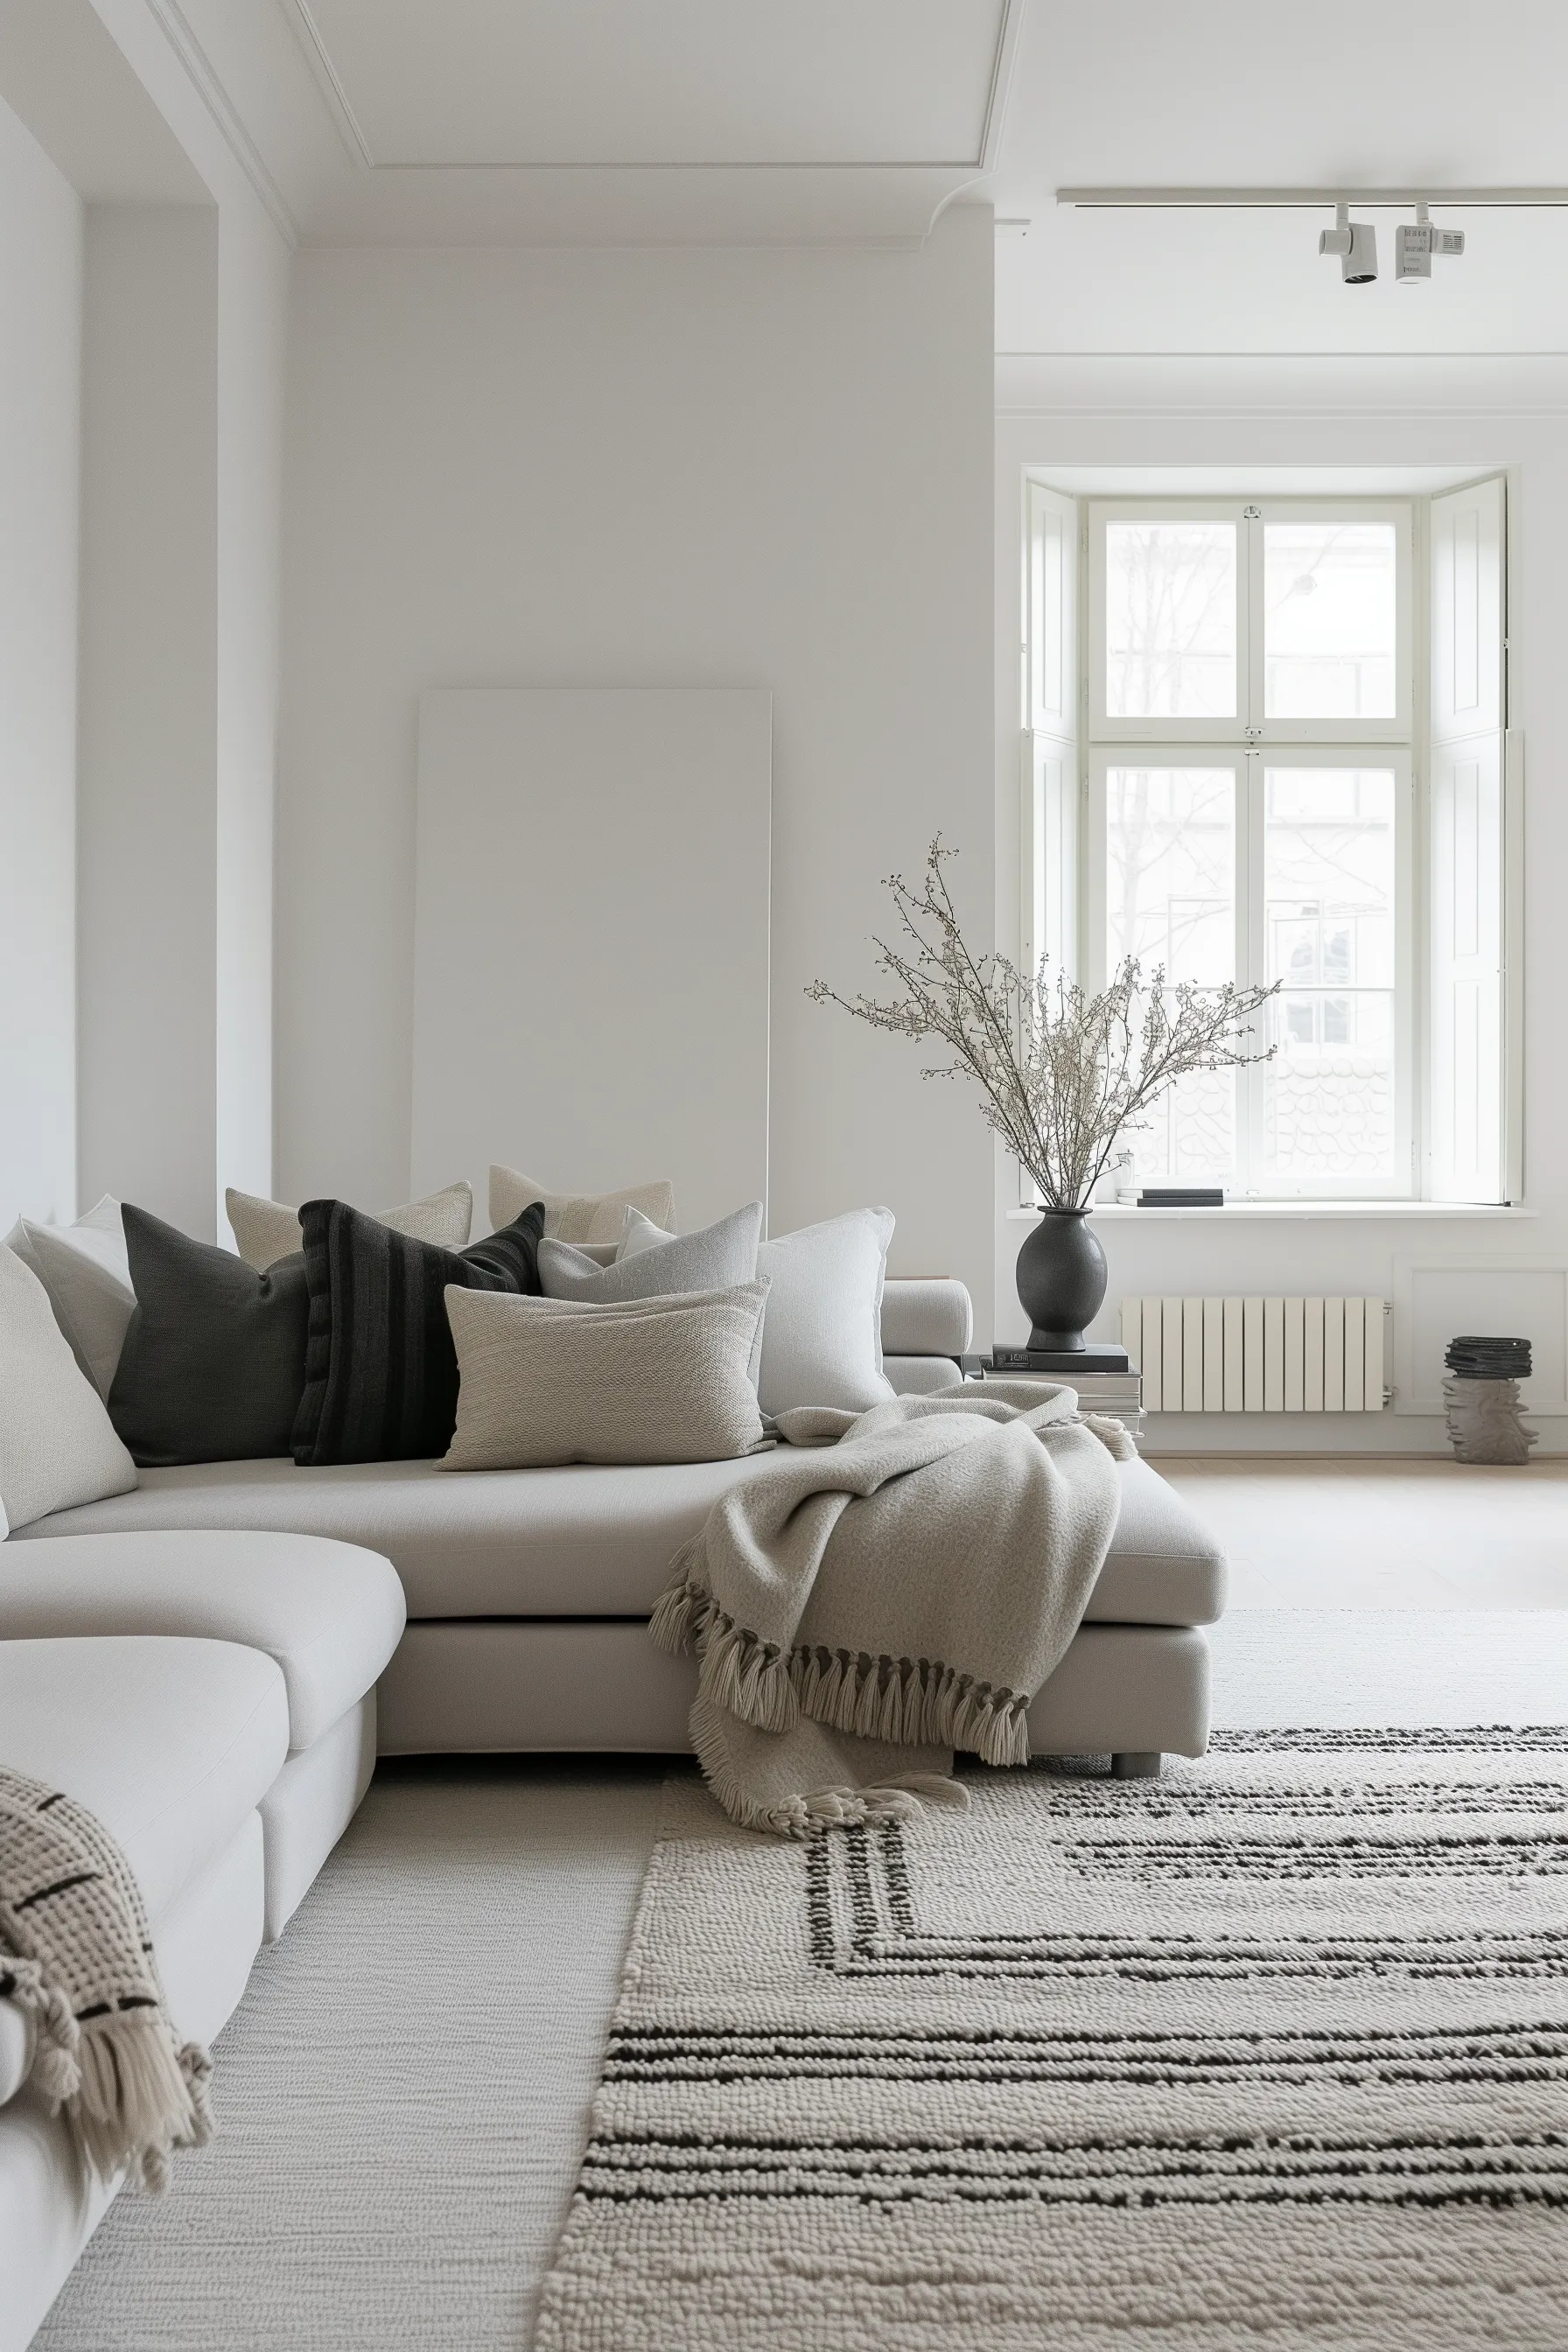 Bohemian living room decor ideas on a budget